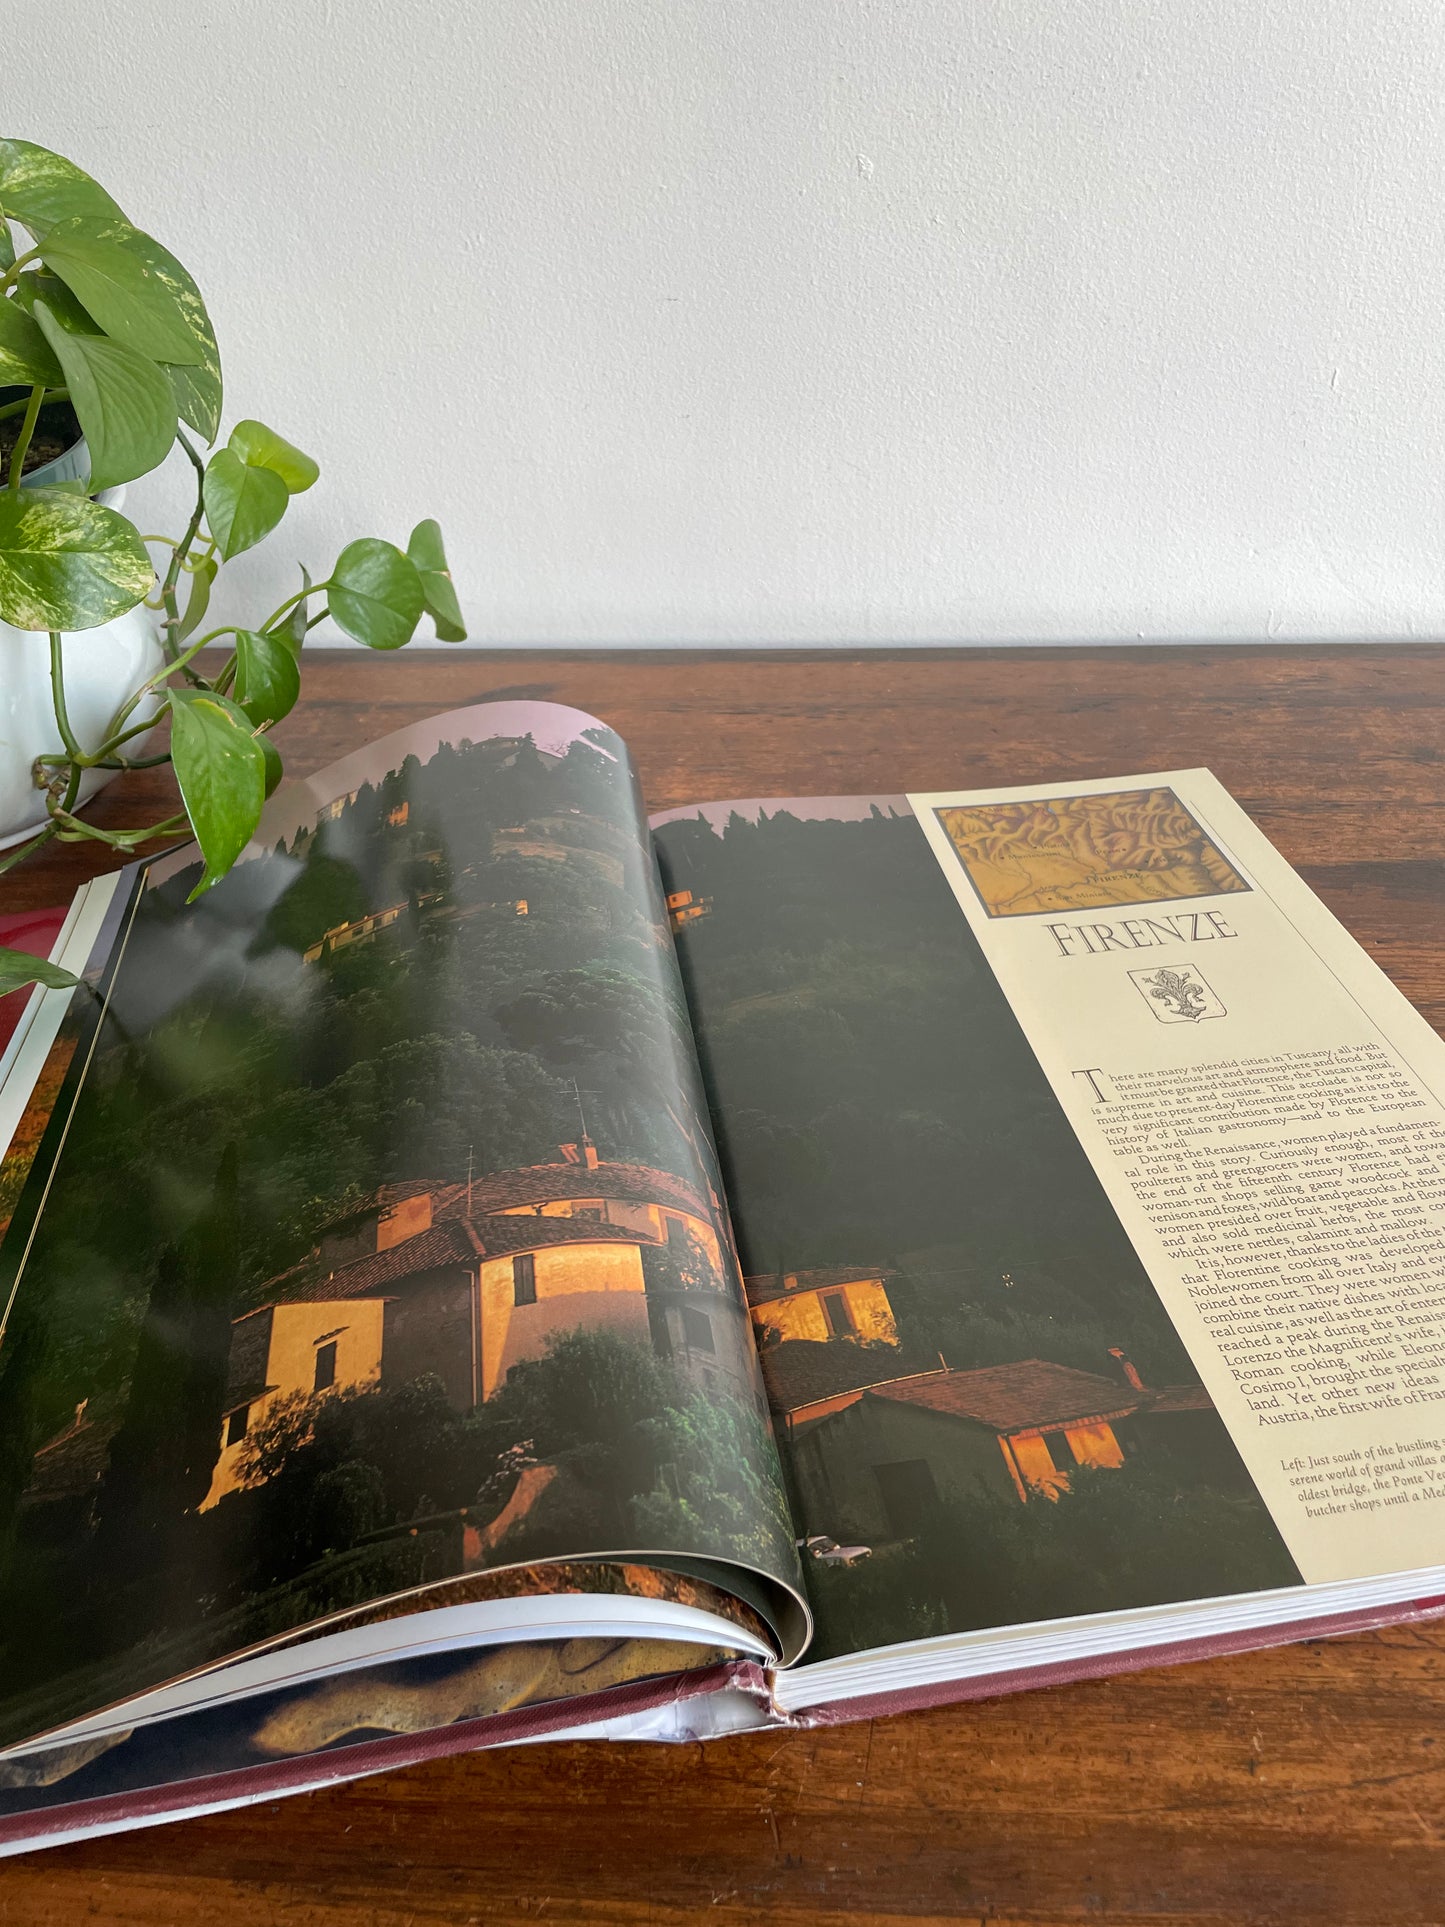 Lorenza De'Medici's Tuscany: The Beautiful Cookbook - Giant Hardcover Book with Photos (1996)